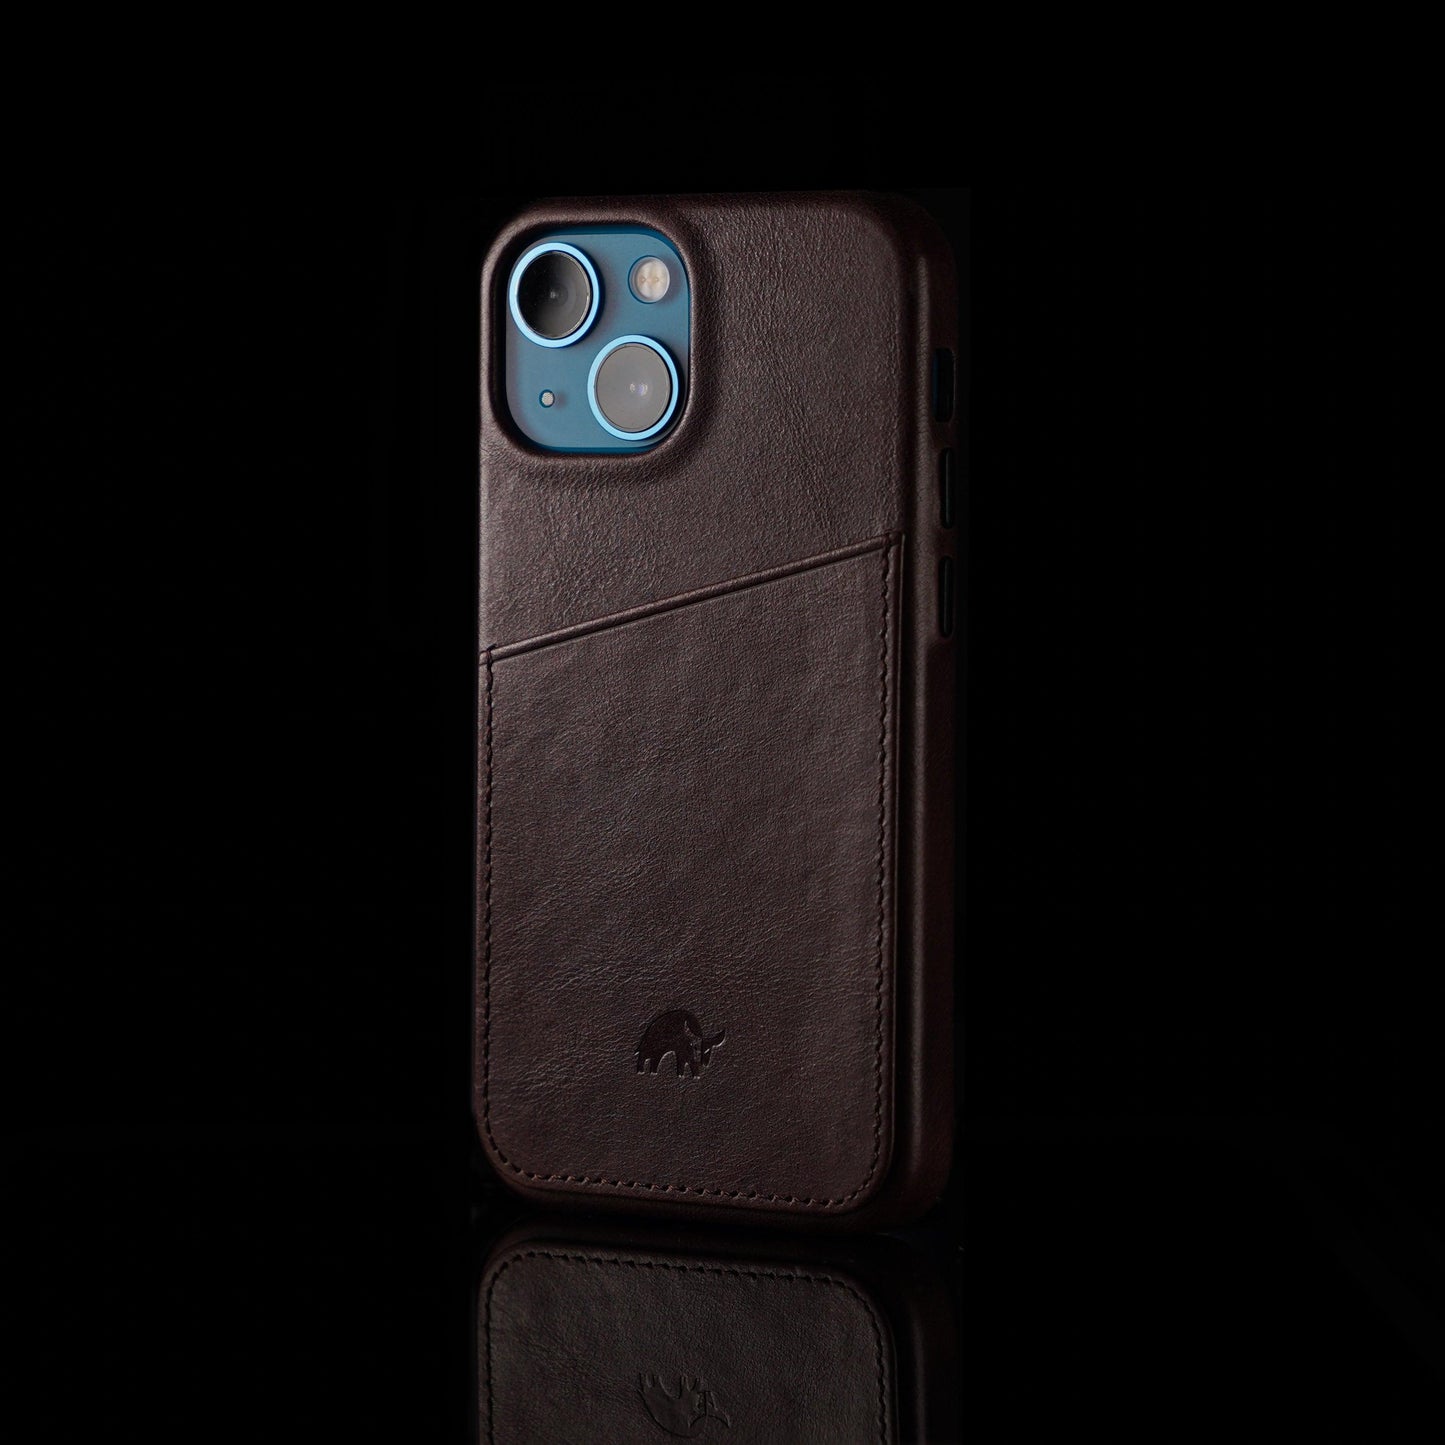 Portfolio iPhone Cases - Bourbon by Bullstrap - The Hammer Sports